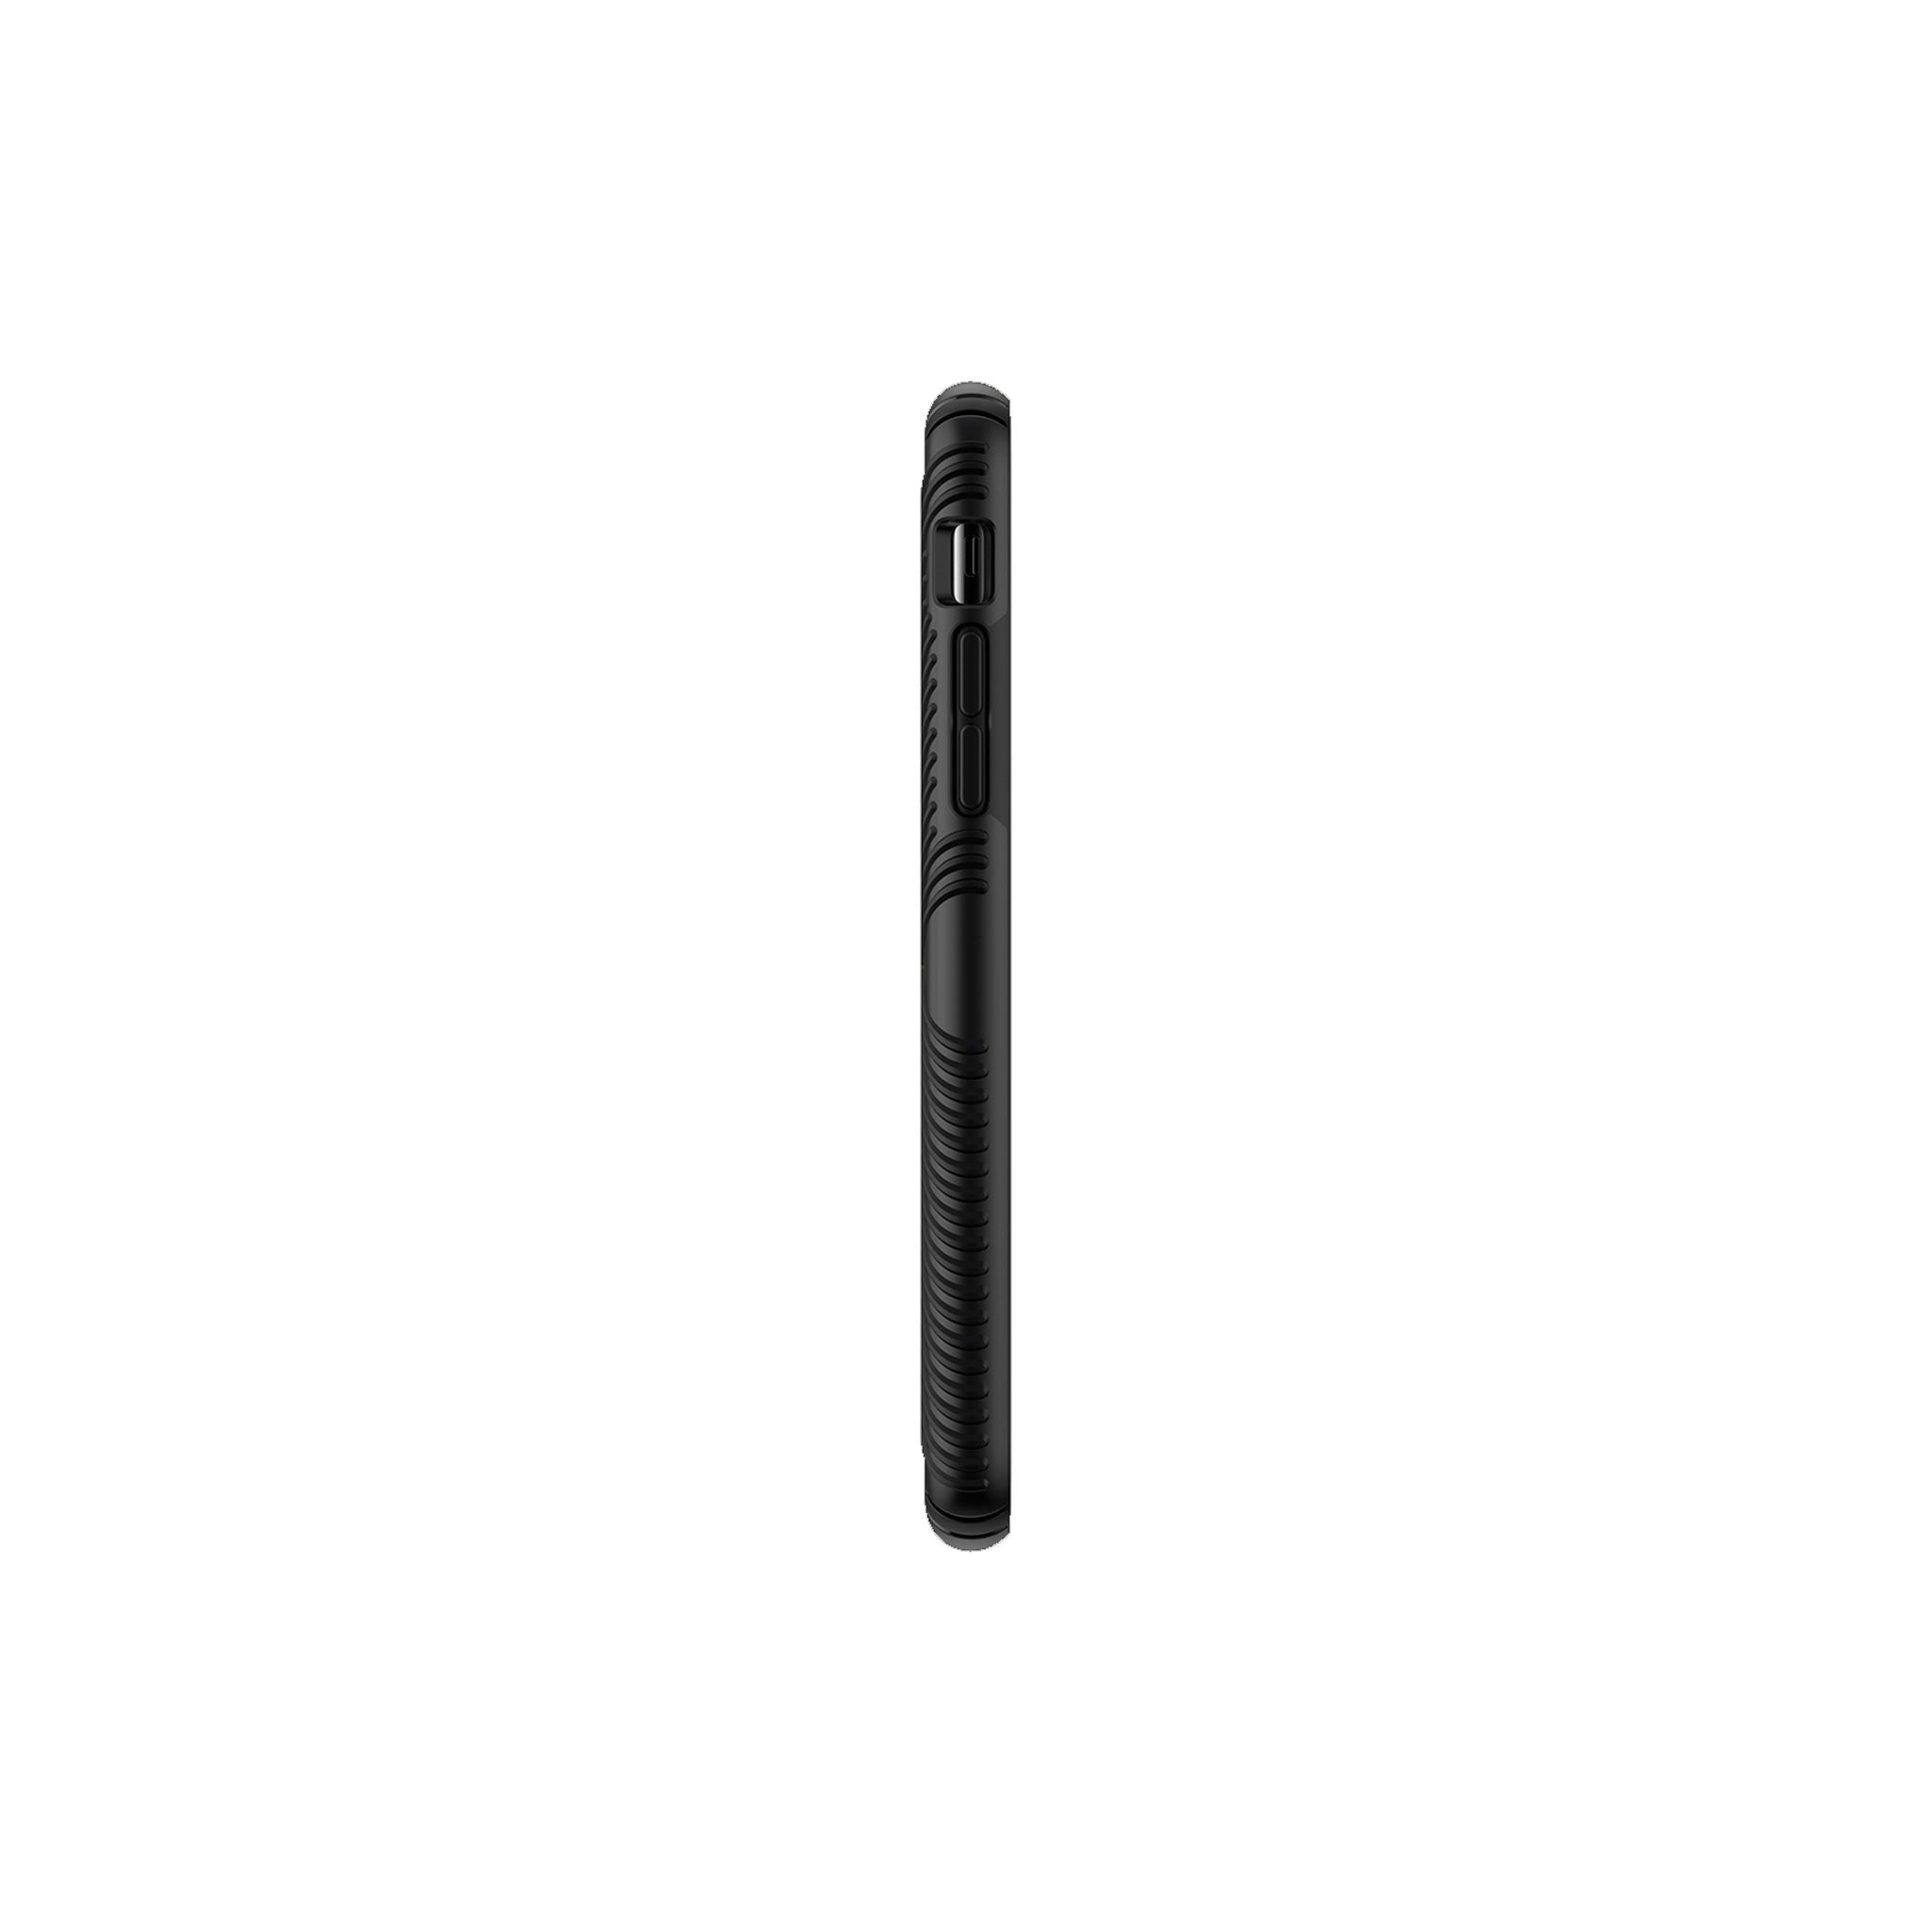 Speck - Presidio Grip Case For Apple Iphone 11 Pro Max - Black